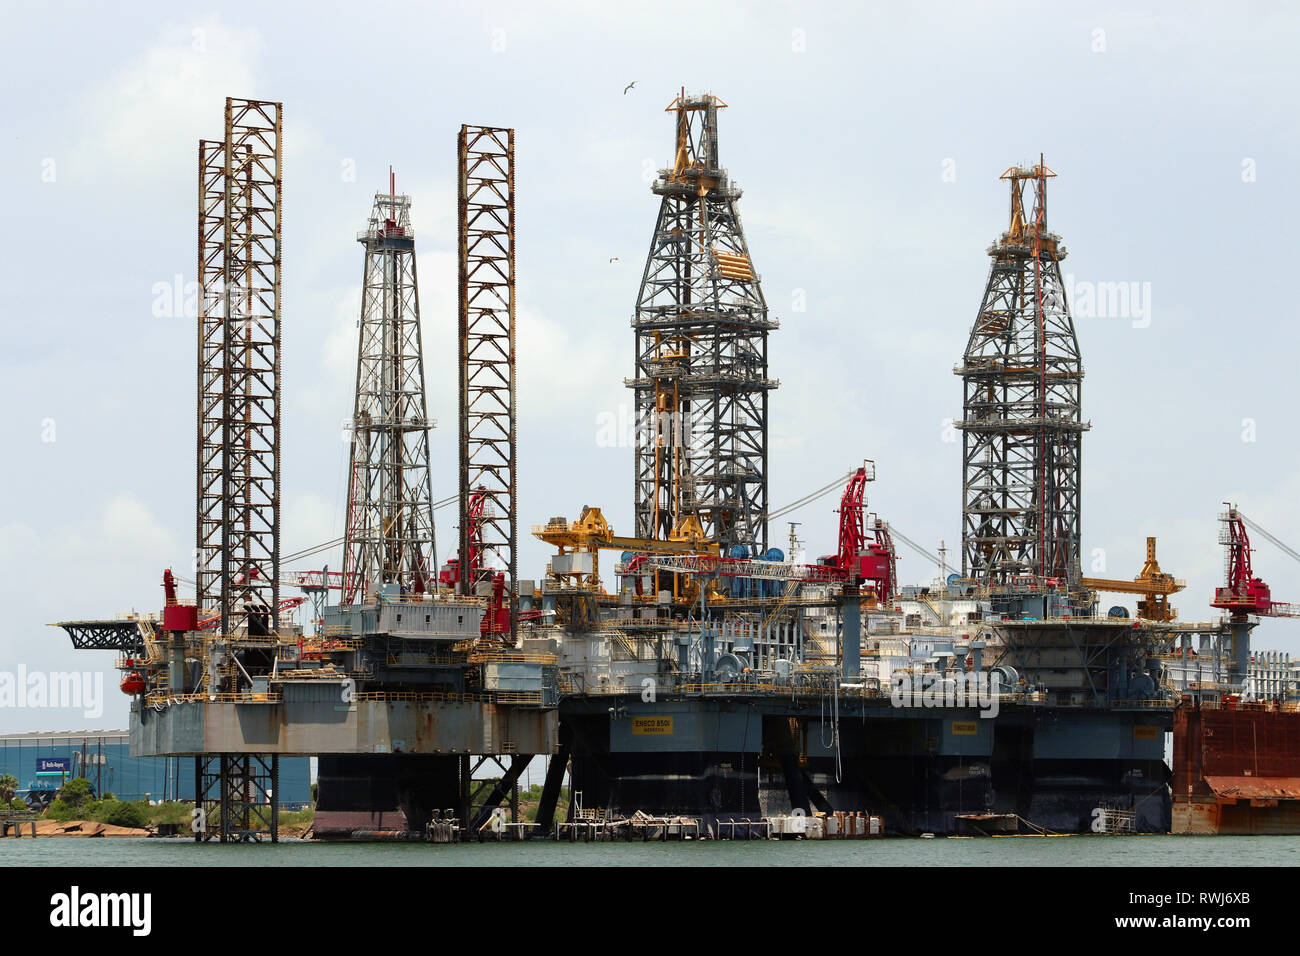 GALVESTON, TEXAS, USA - JUNE 9, 2018: Docked oil platform, offshore drilling rig, in Port of Galveston, Texas. Stock Photo